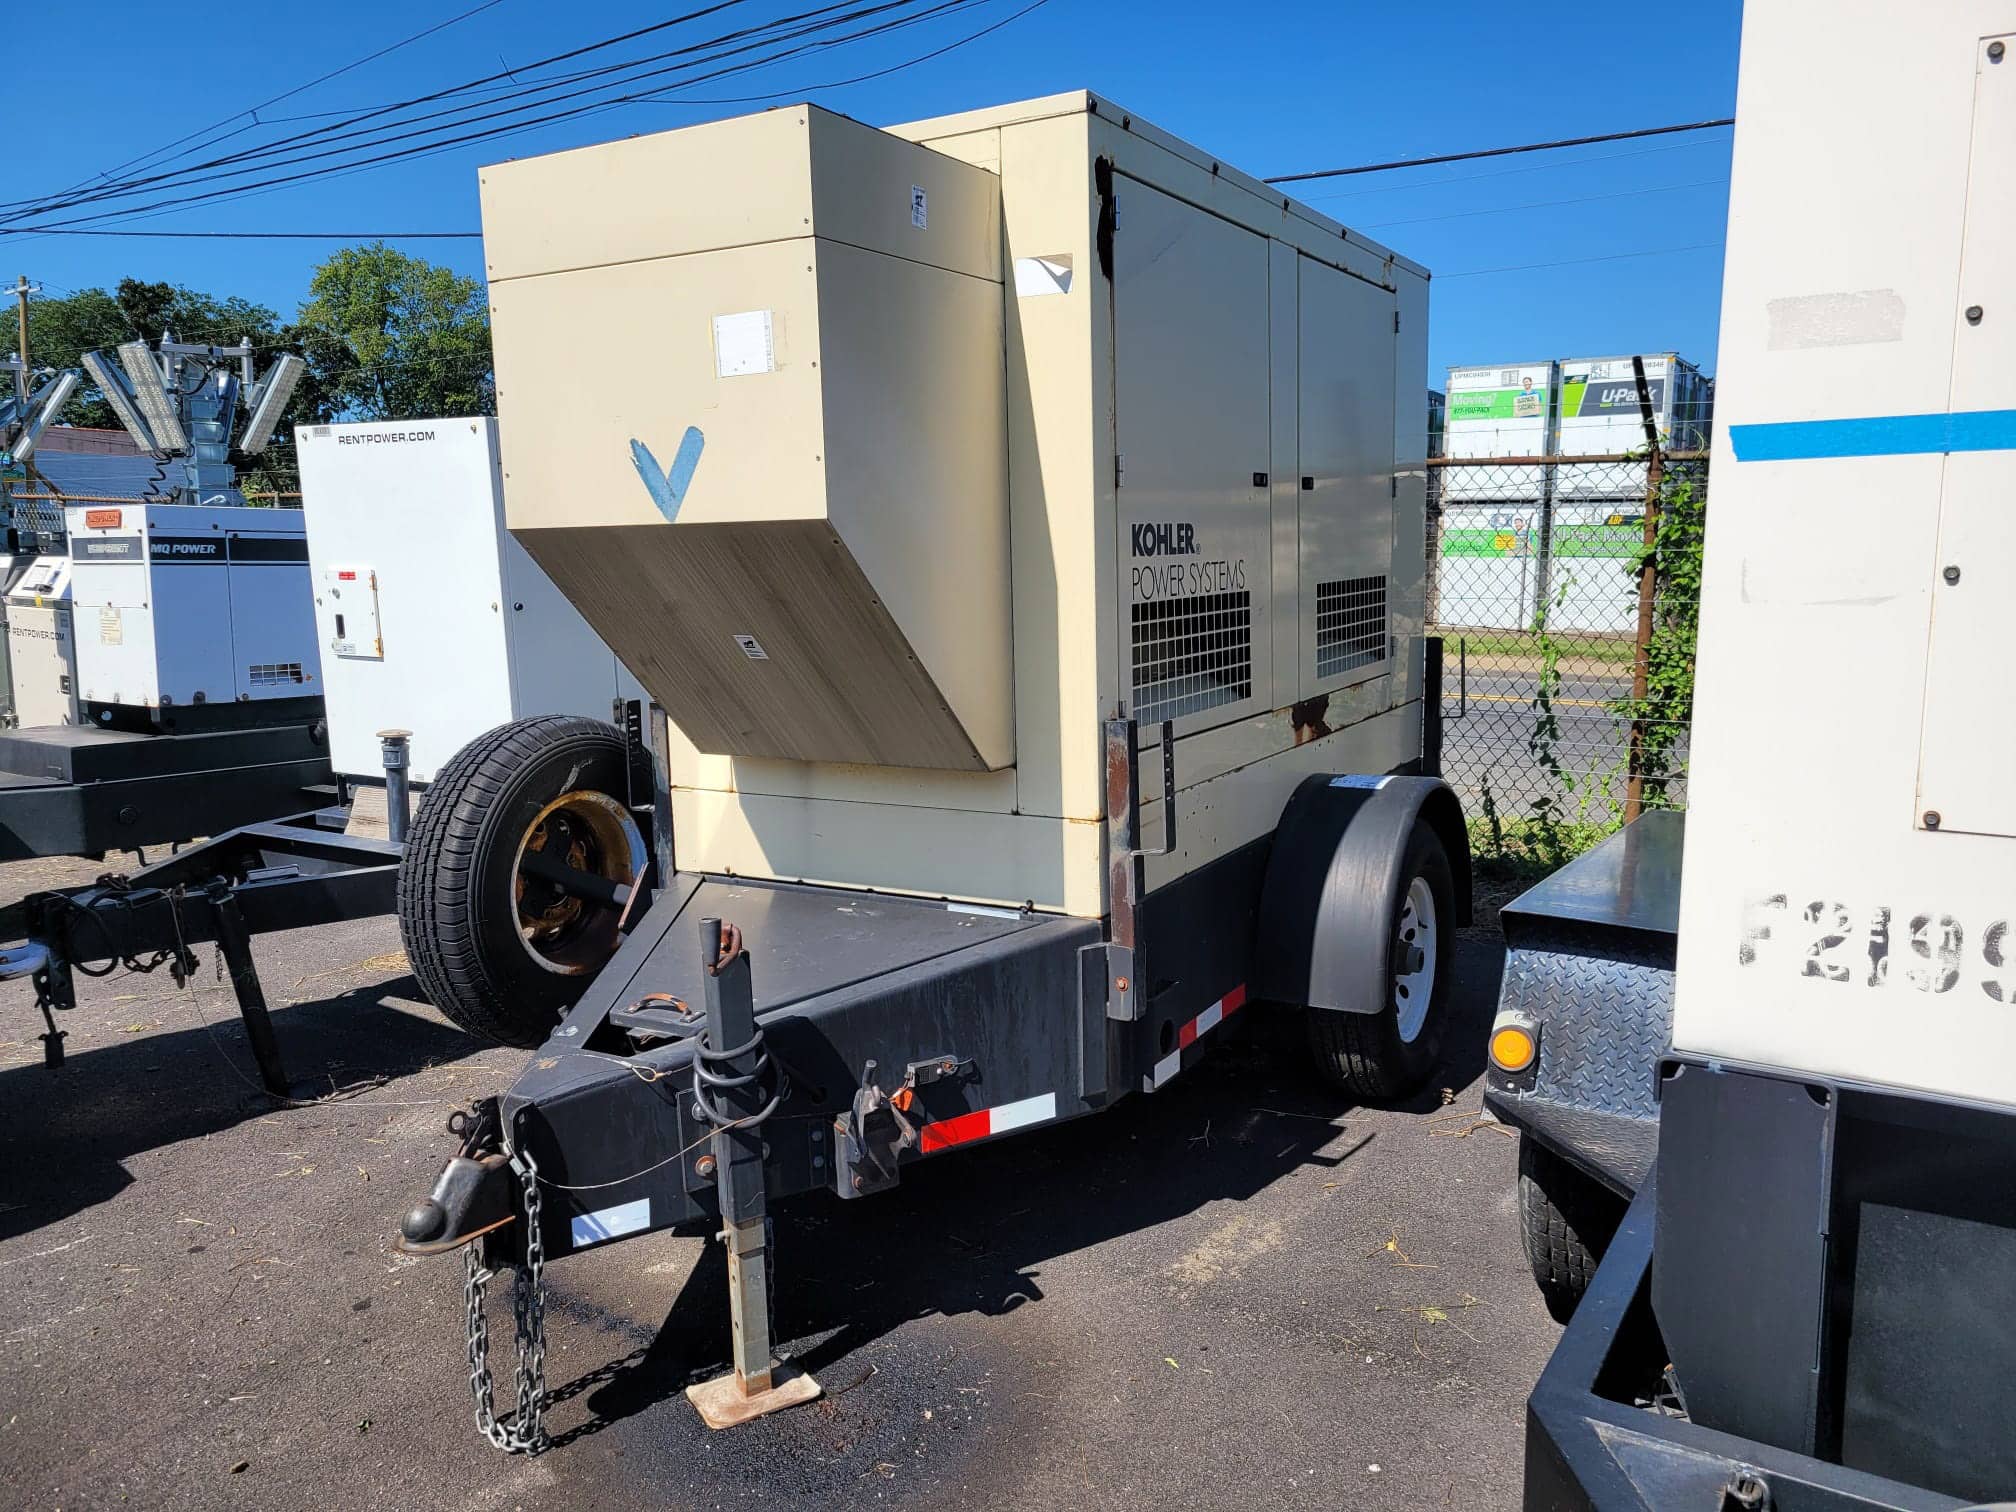 Used 23 kW Kohler 20REOZJB Portable Diesel Generator – EPA Tier 2